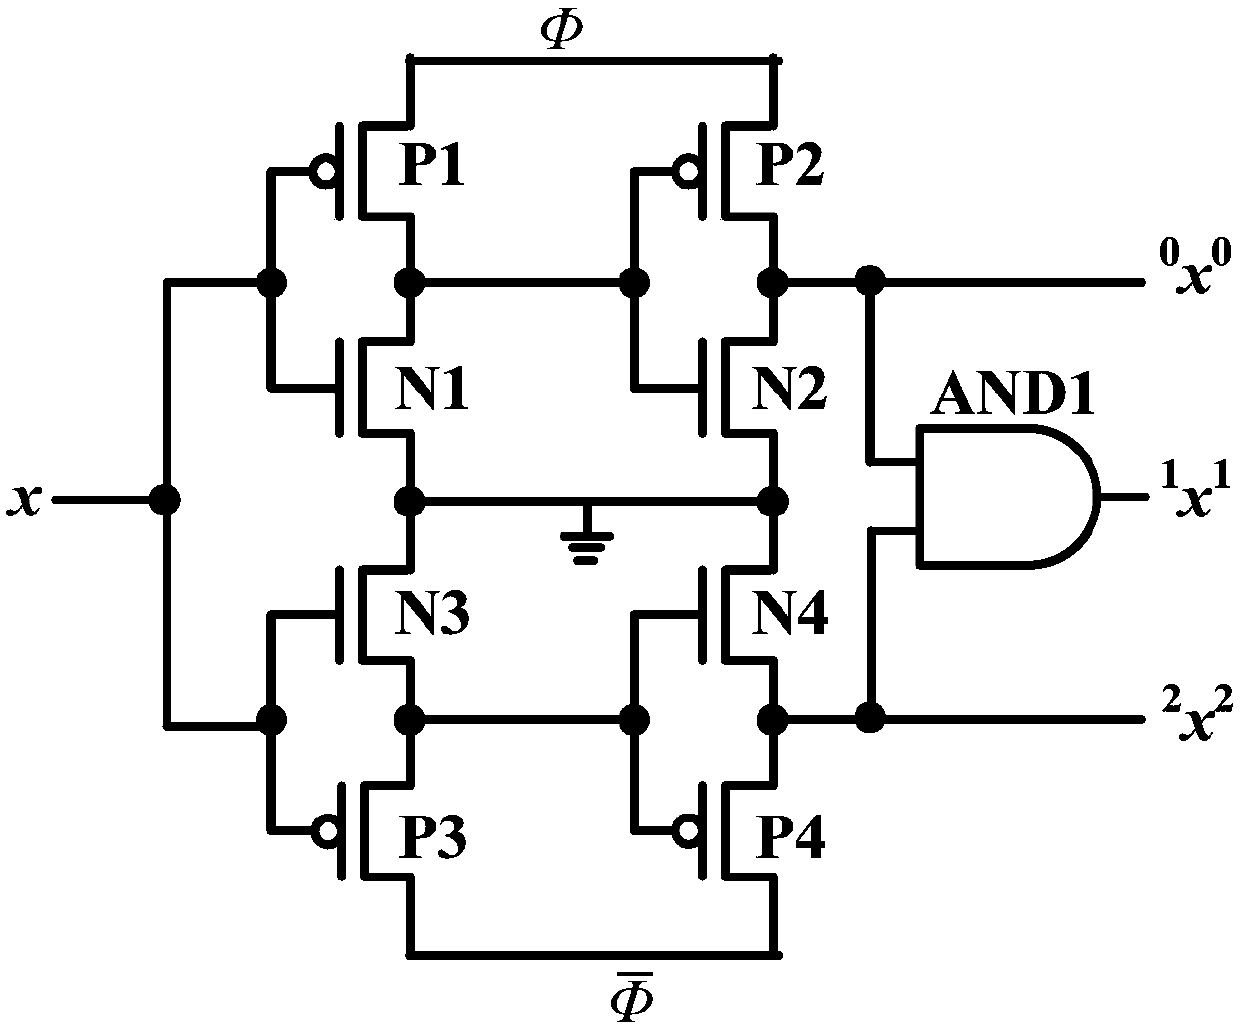 Multi-value adiabatic phase inverter based on transmission gate structure